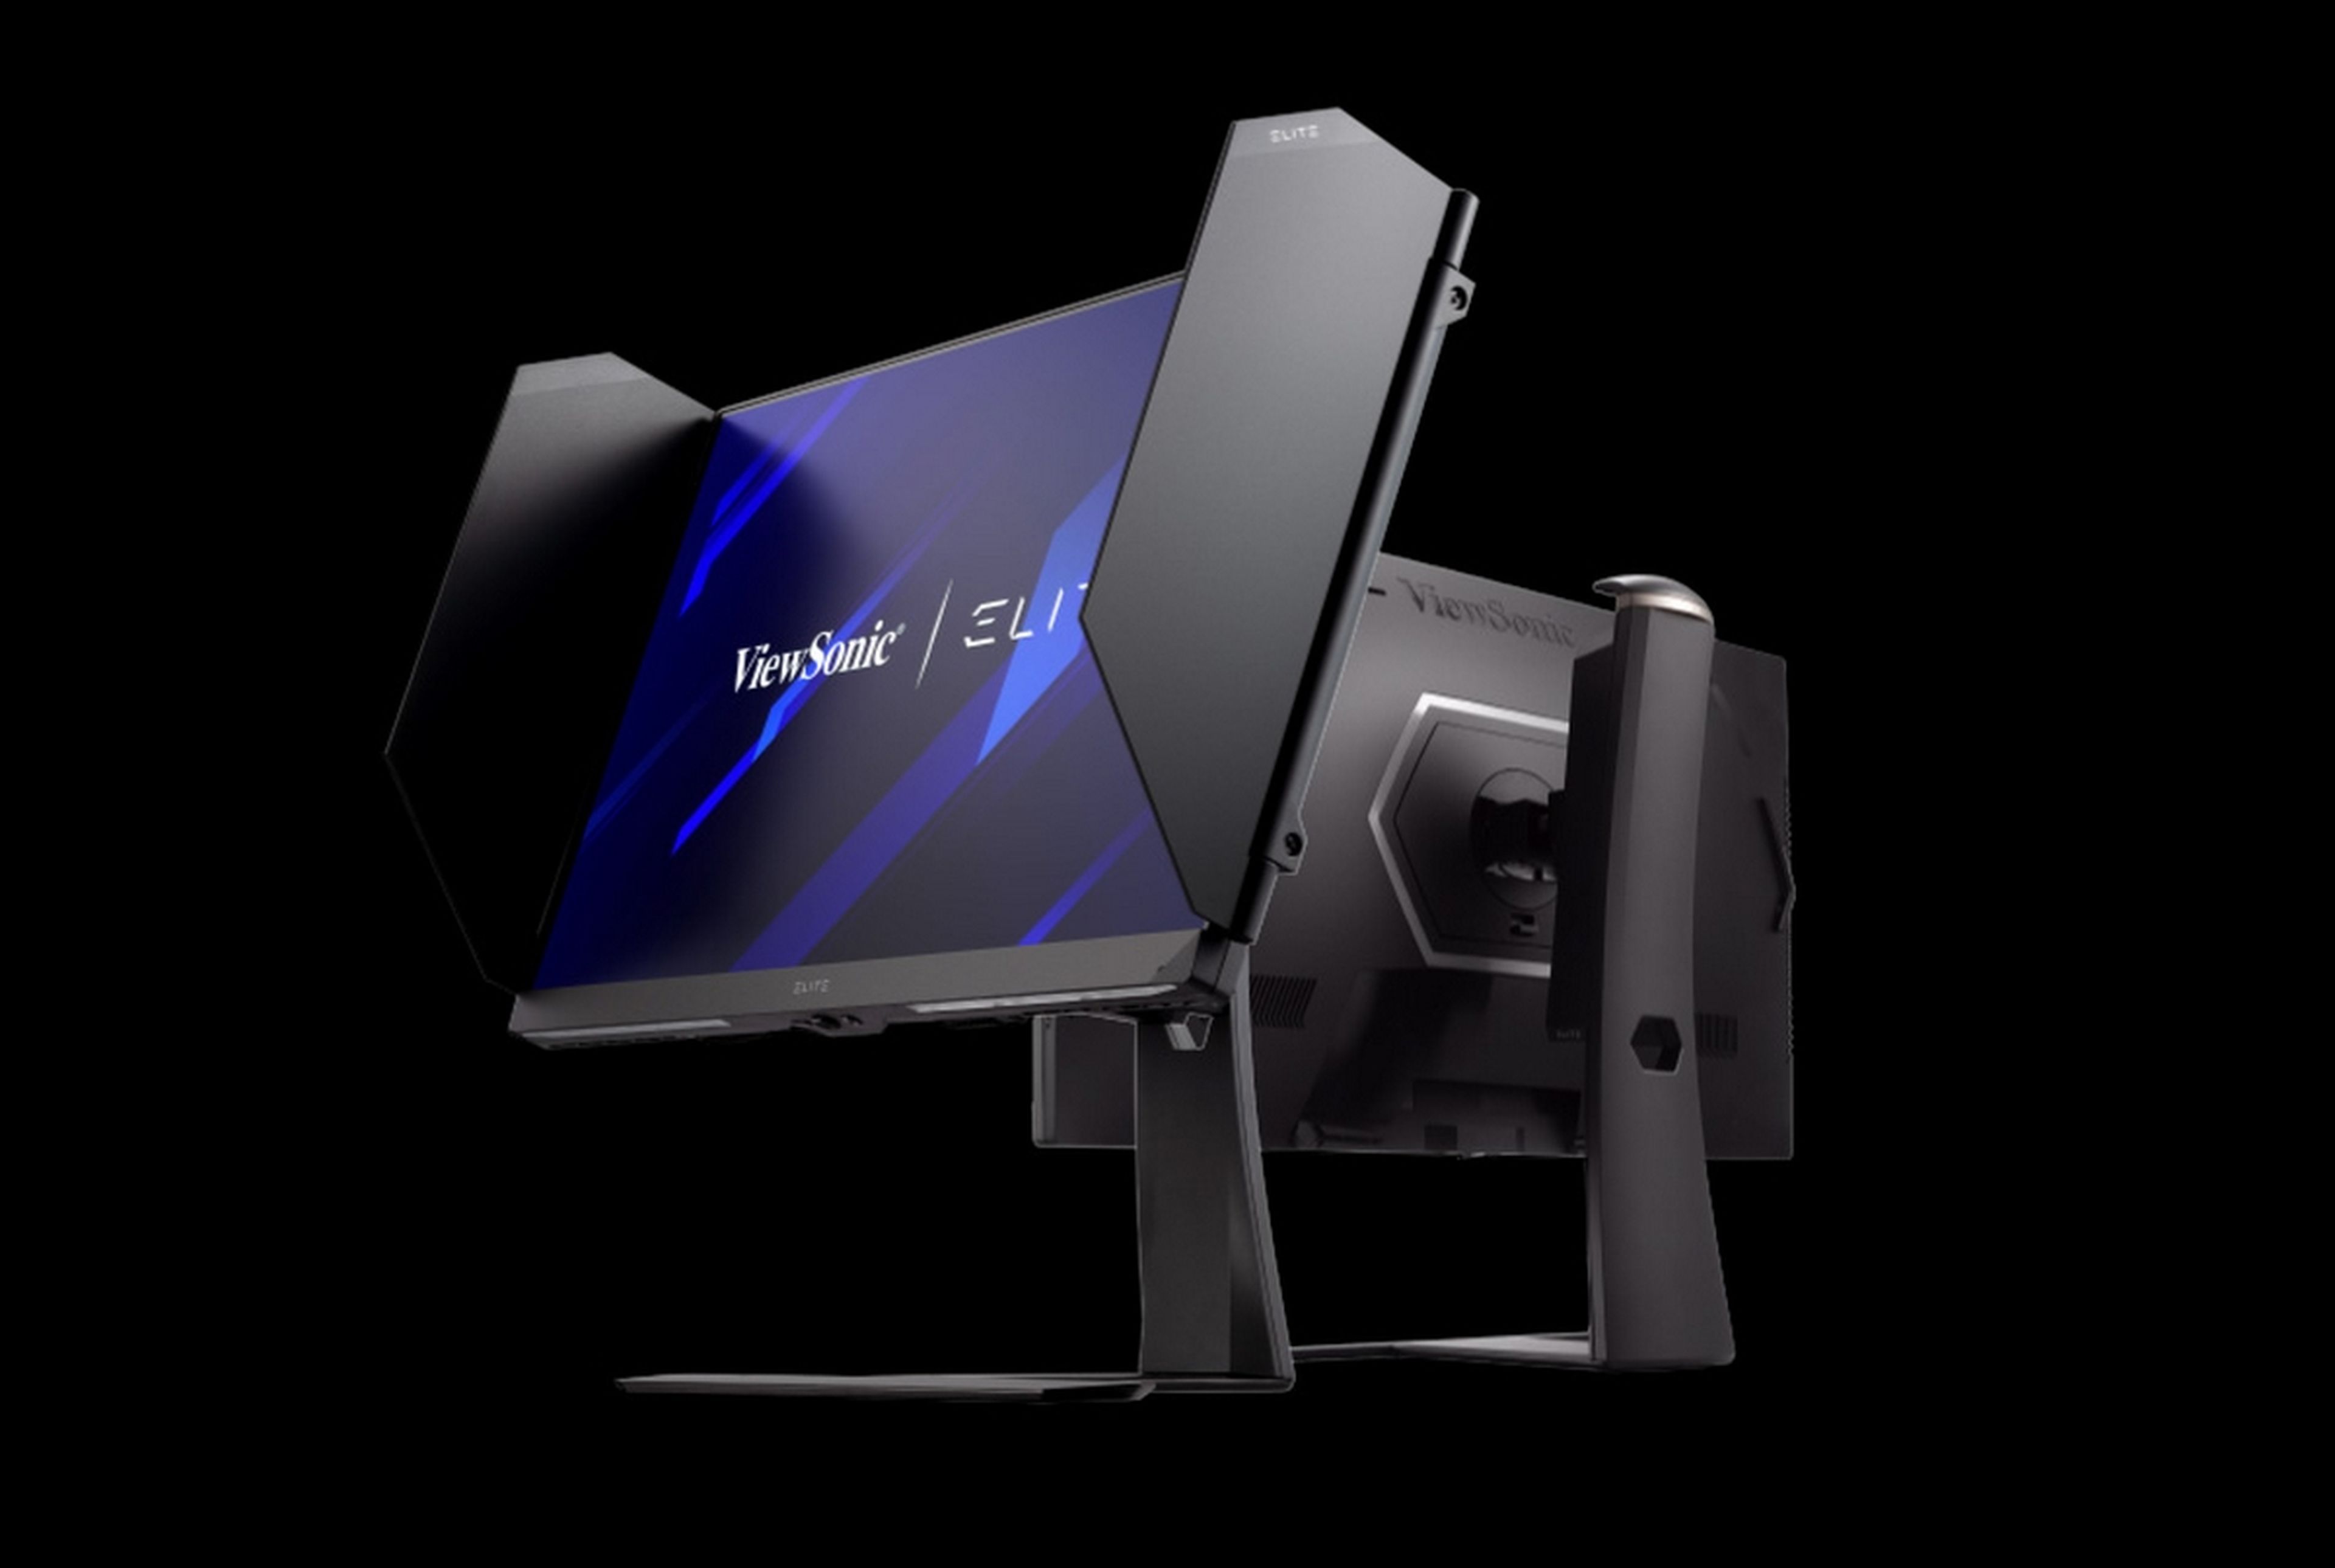 Viewsonic anuncia un monitor 4K a 144 Hz con HDMI 2.1